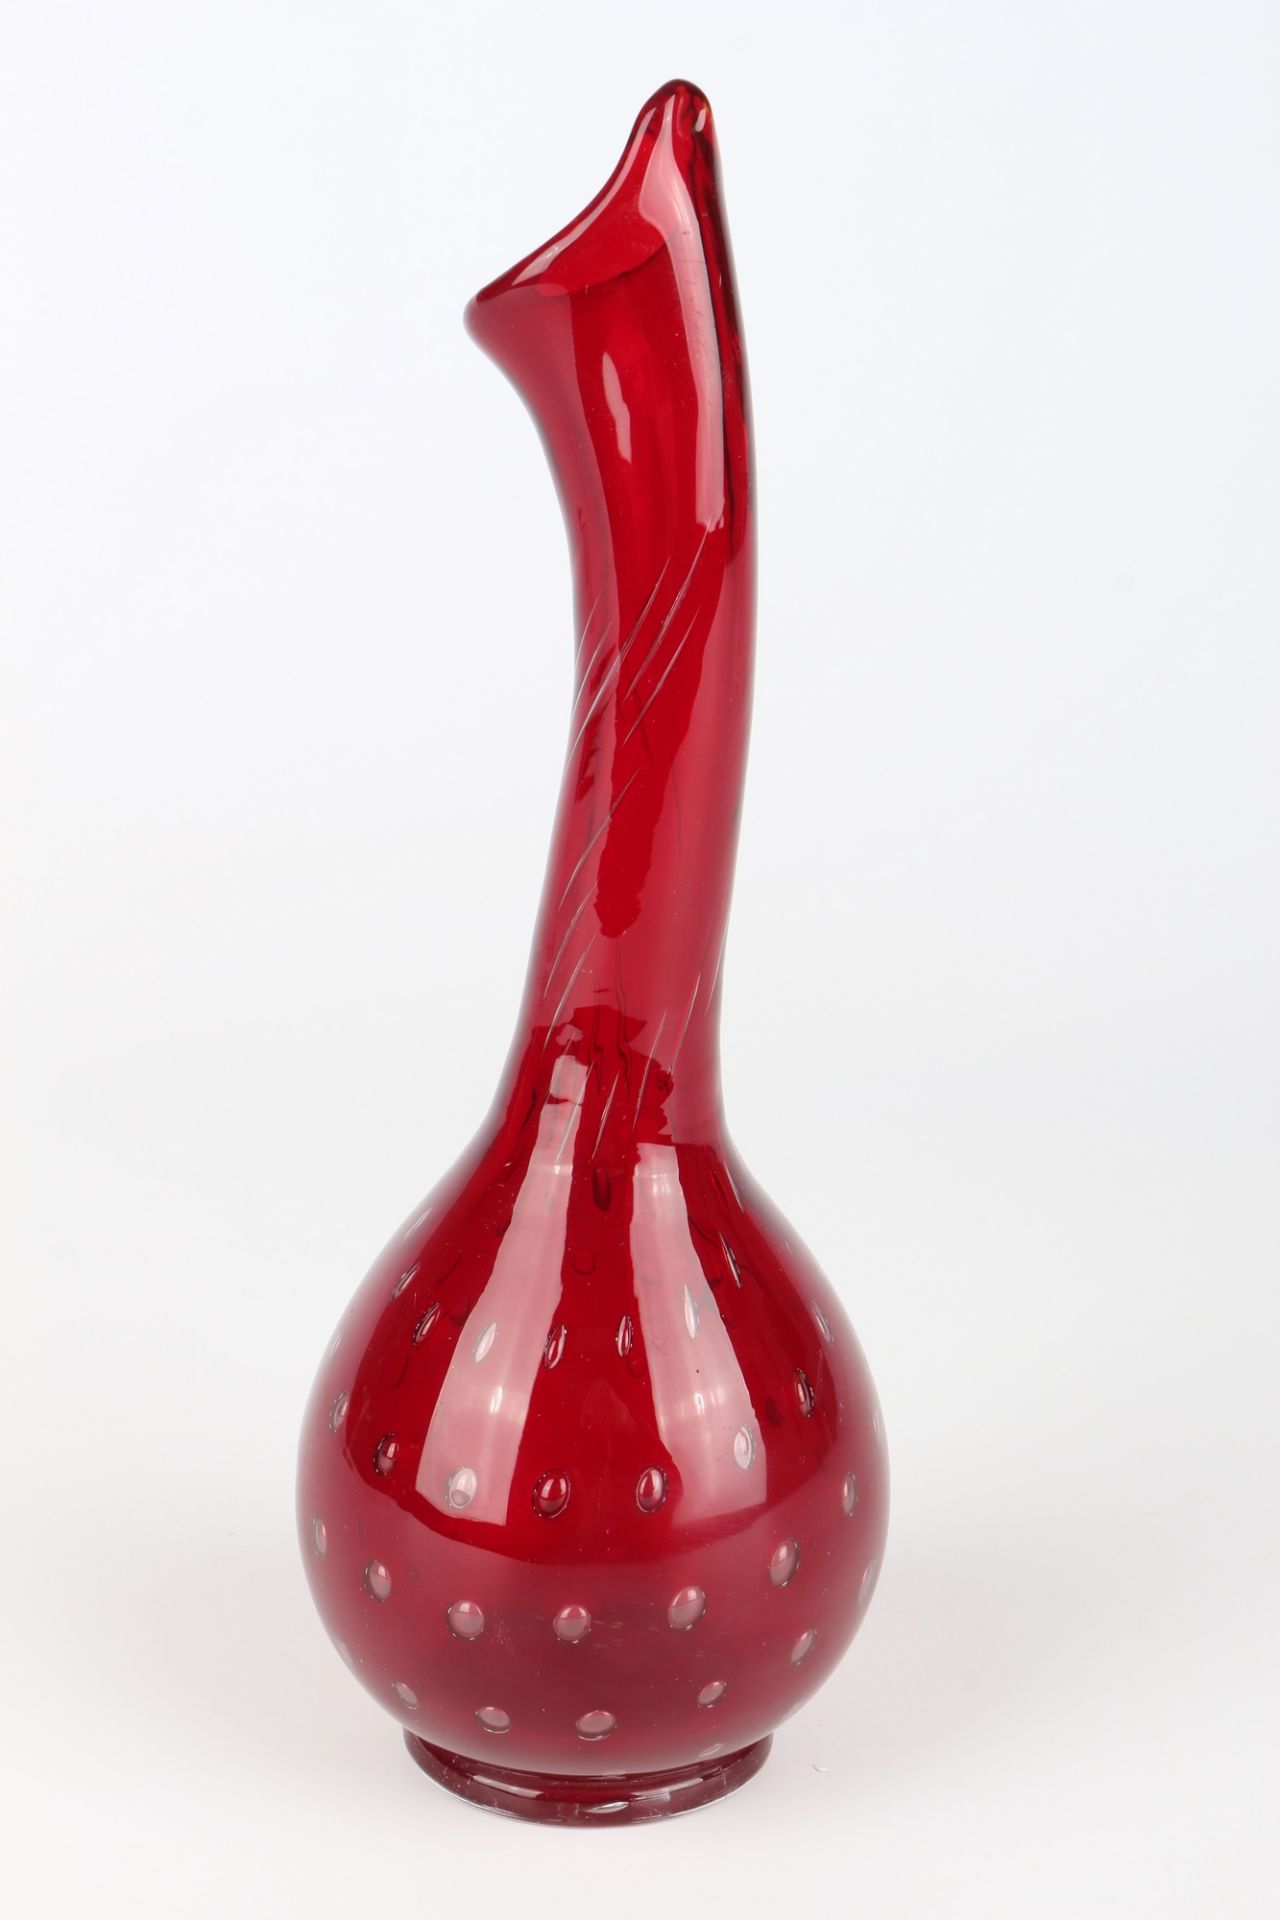 Venini Murano bauchige Vase, stem vase, - Image 3 of 4